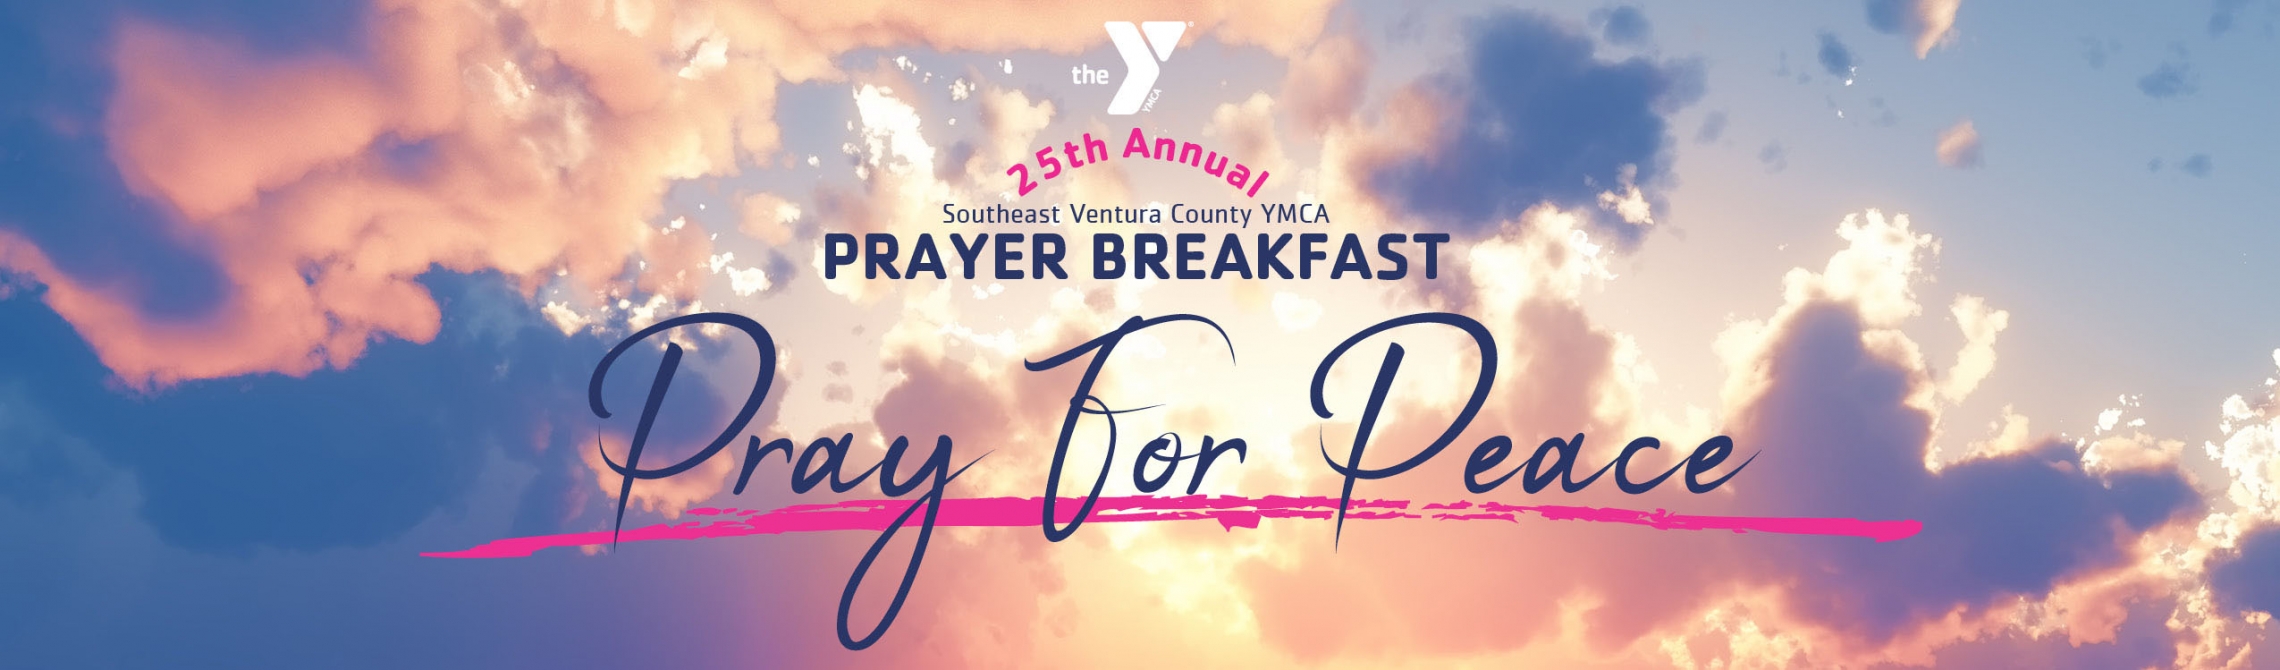 National Day of Prayer Southeast Ventura County YMCA